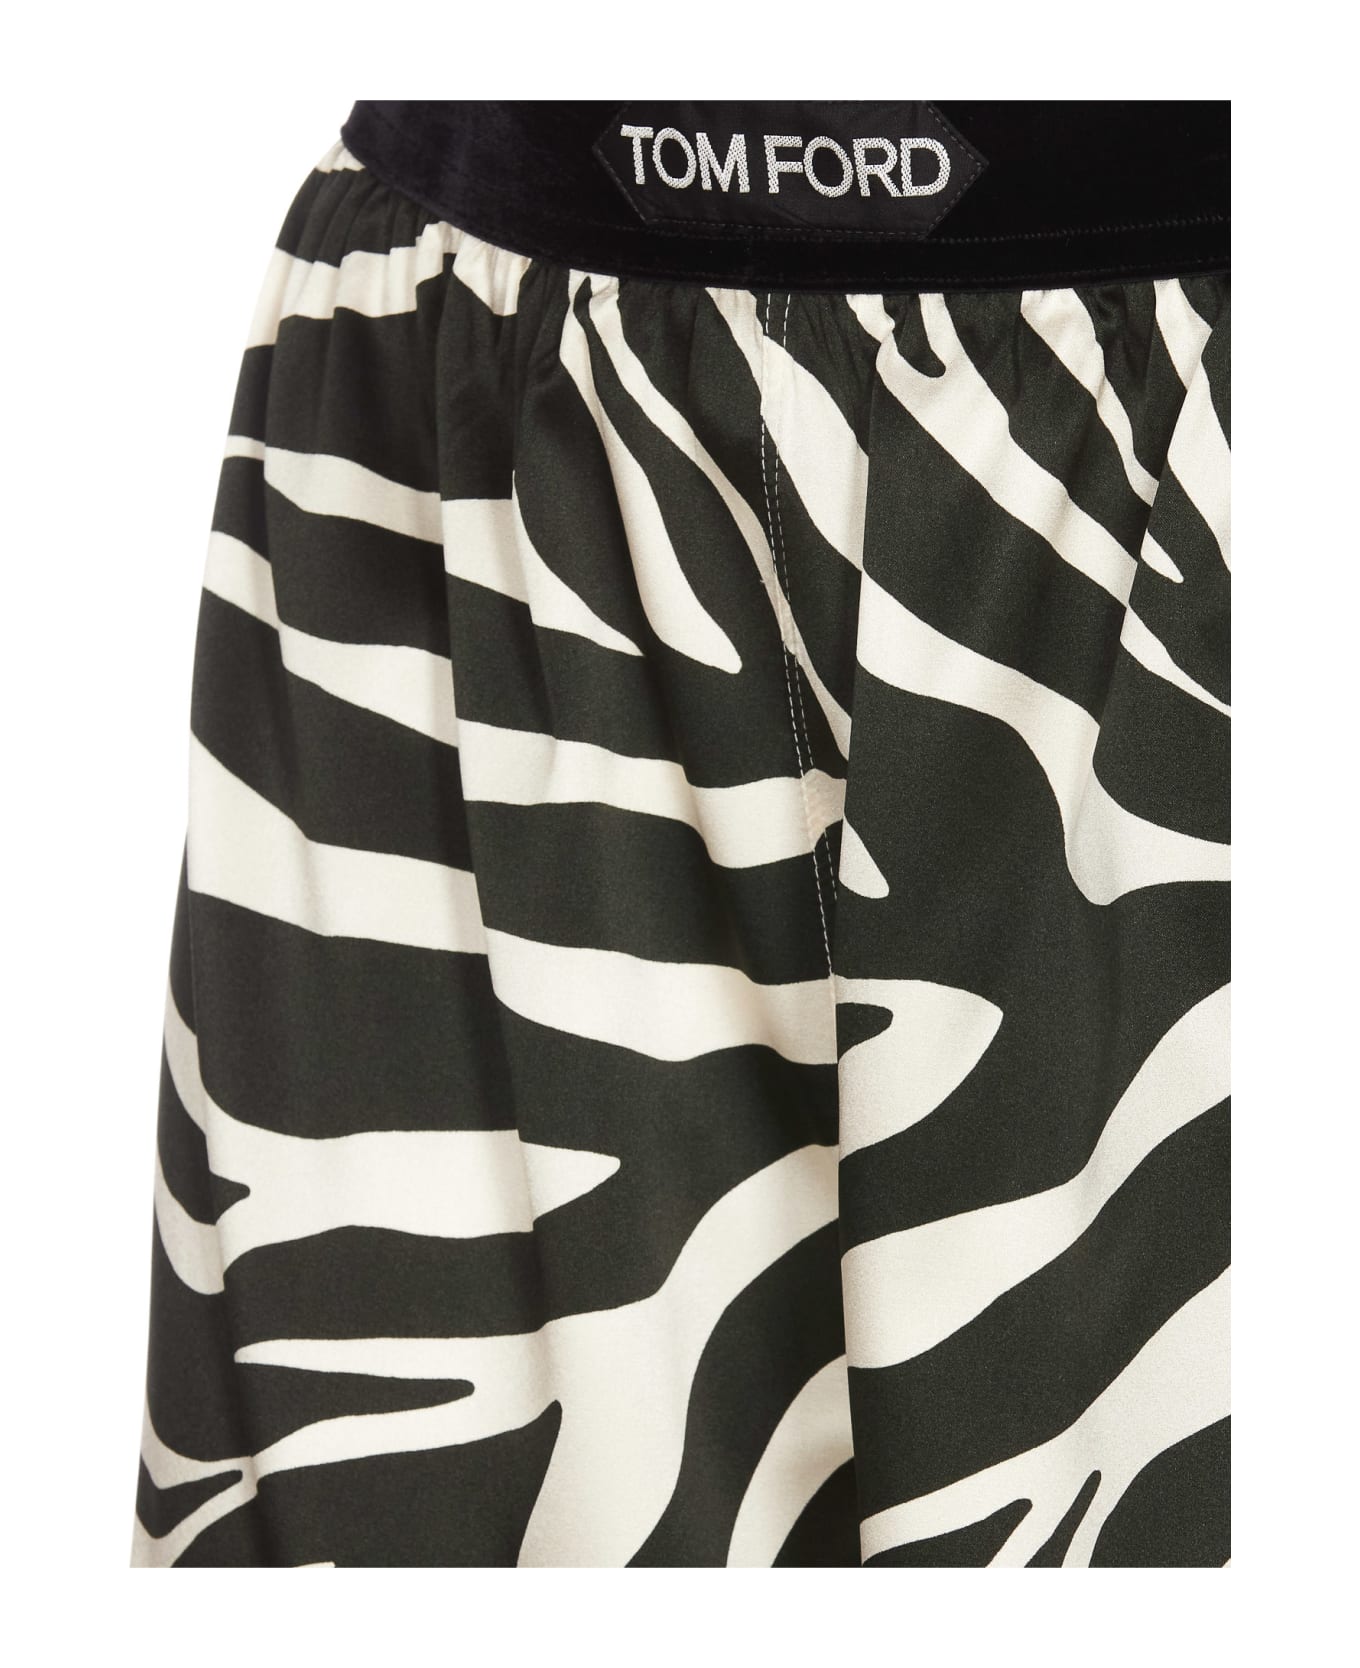 Tom Ford Zebra Print Shorts - Black